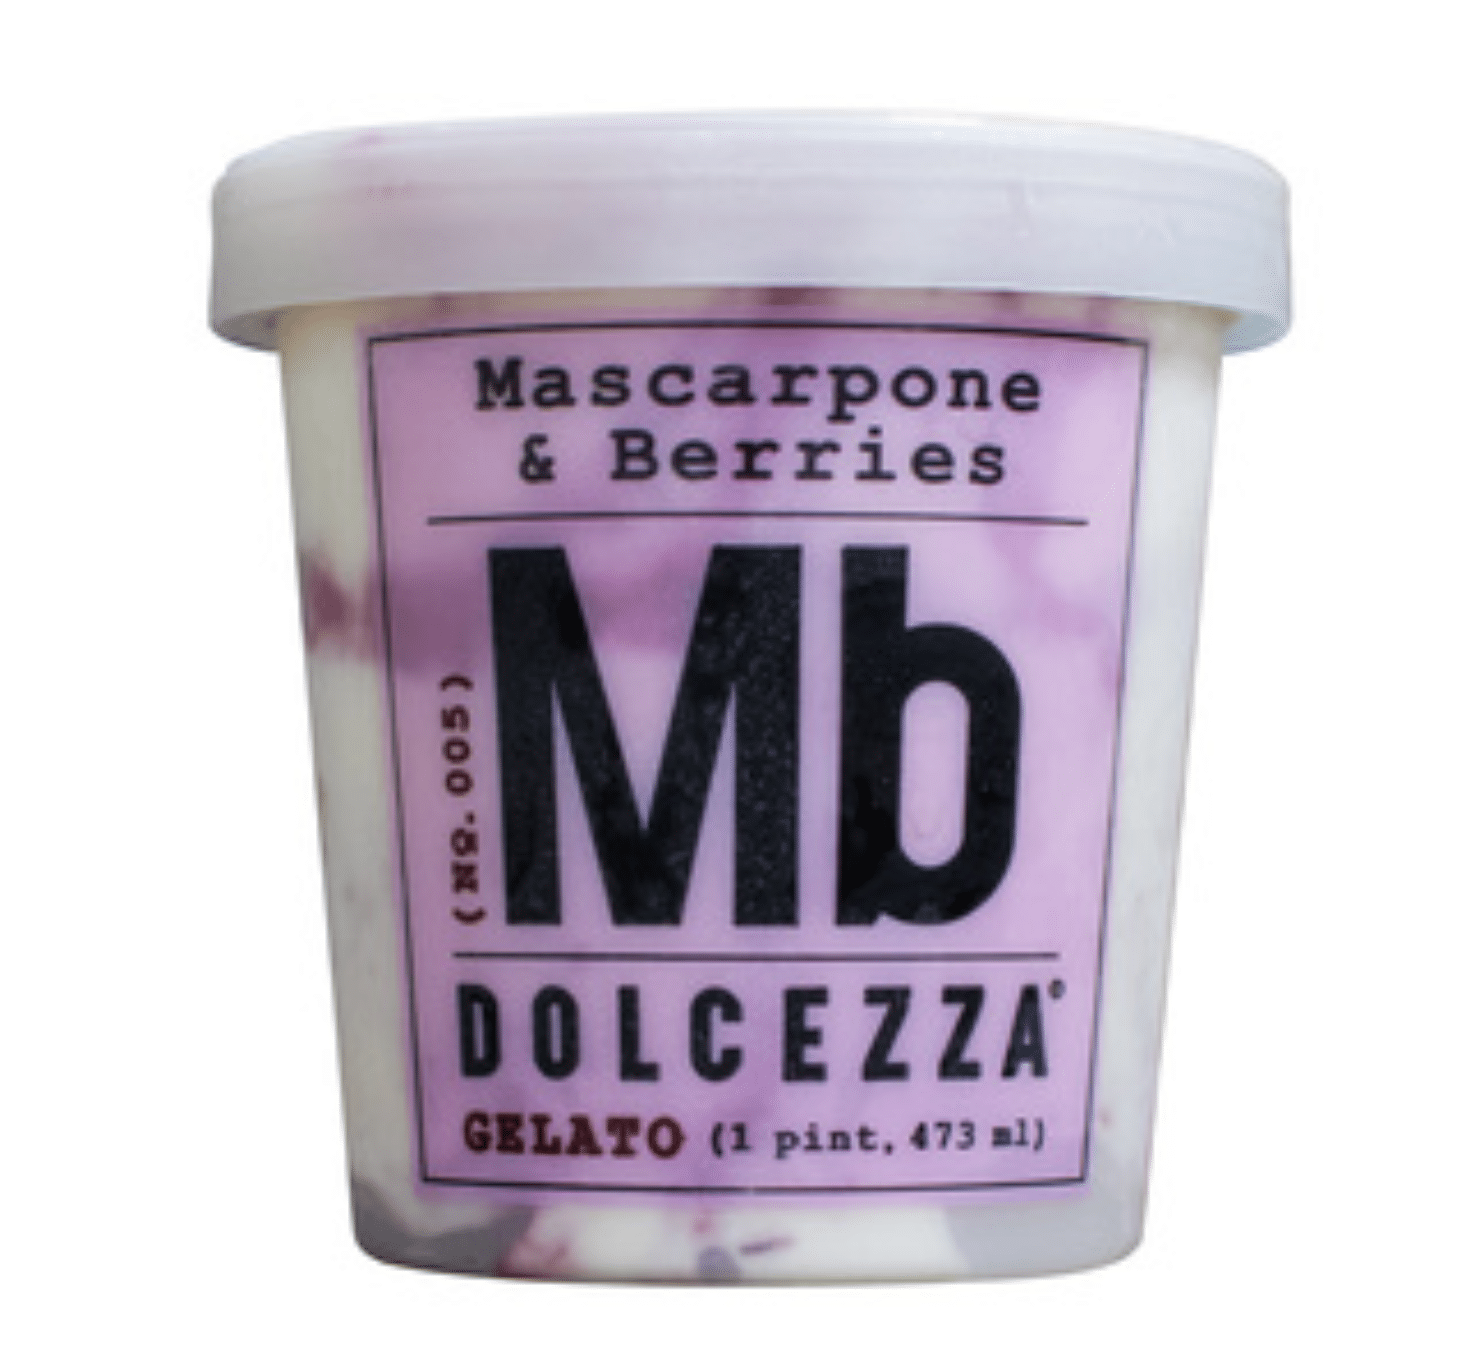 Mascarpone & Berries gelato pint